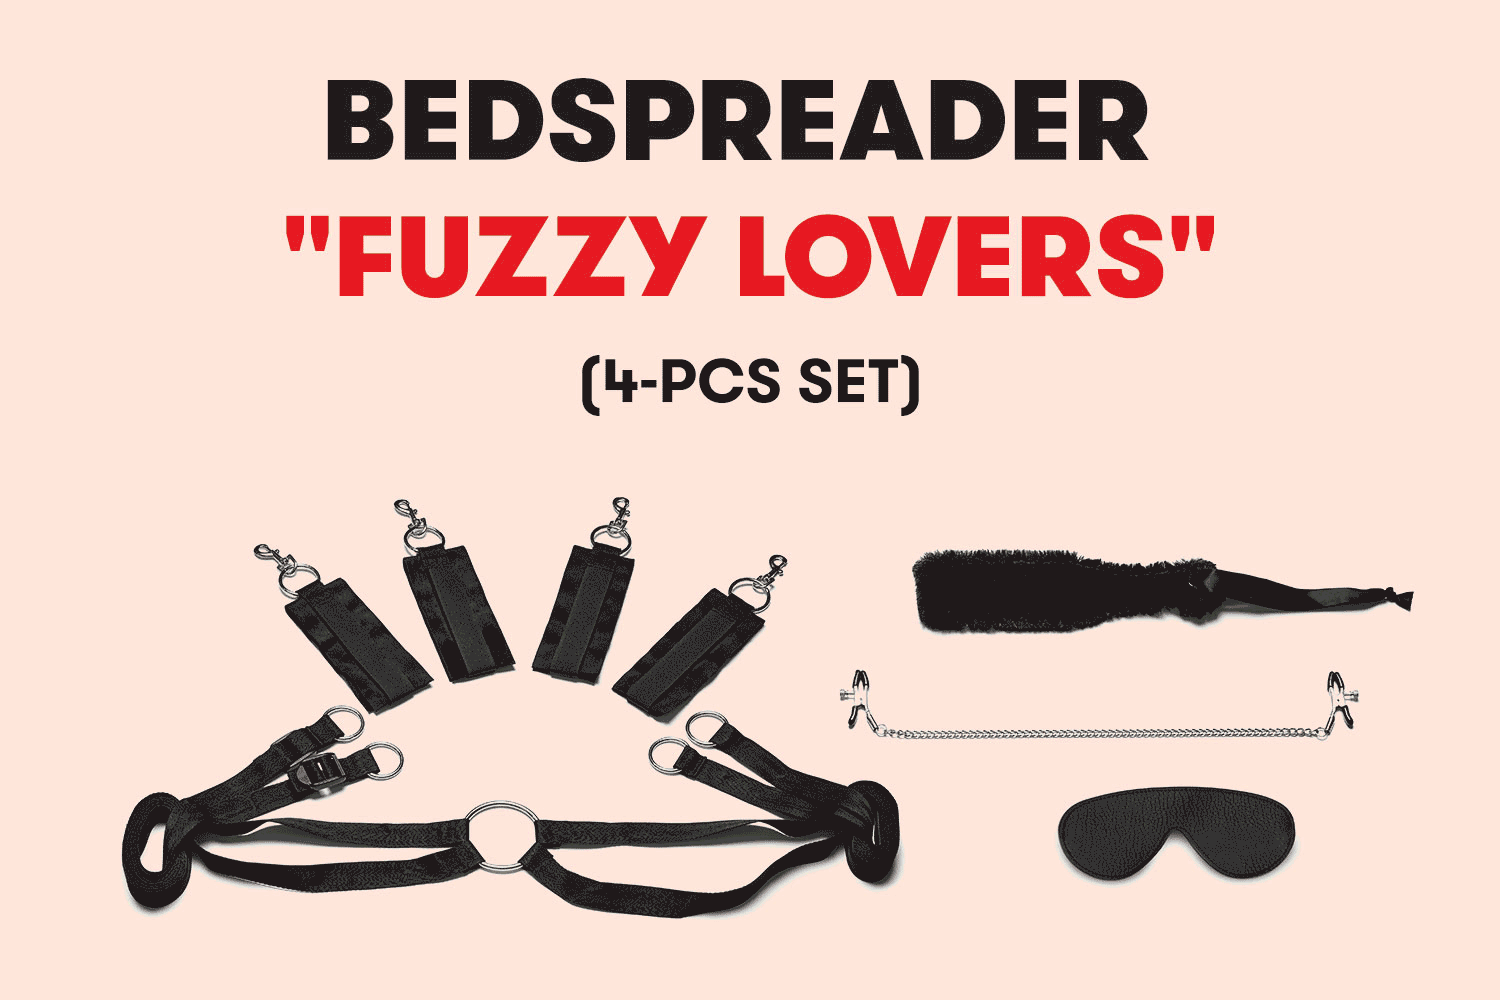 Bedspreader "Fuzzy Lovers" (4-pcs Set)